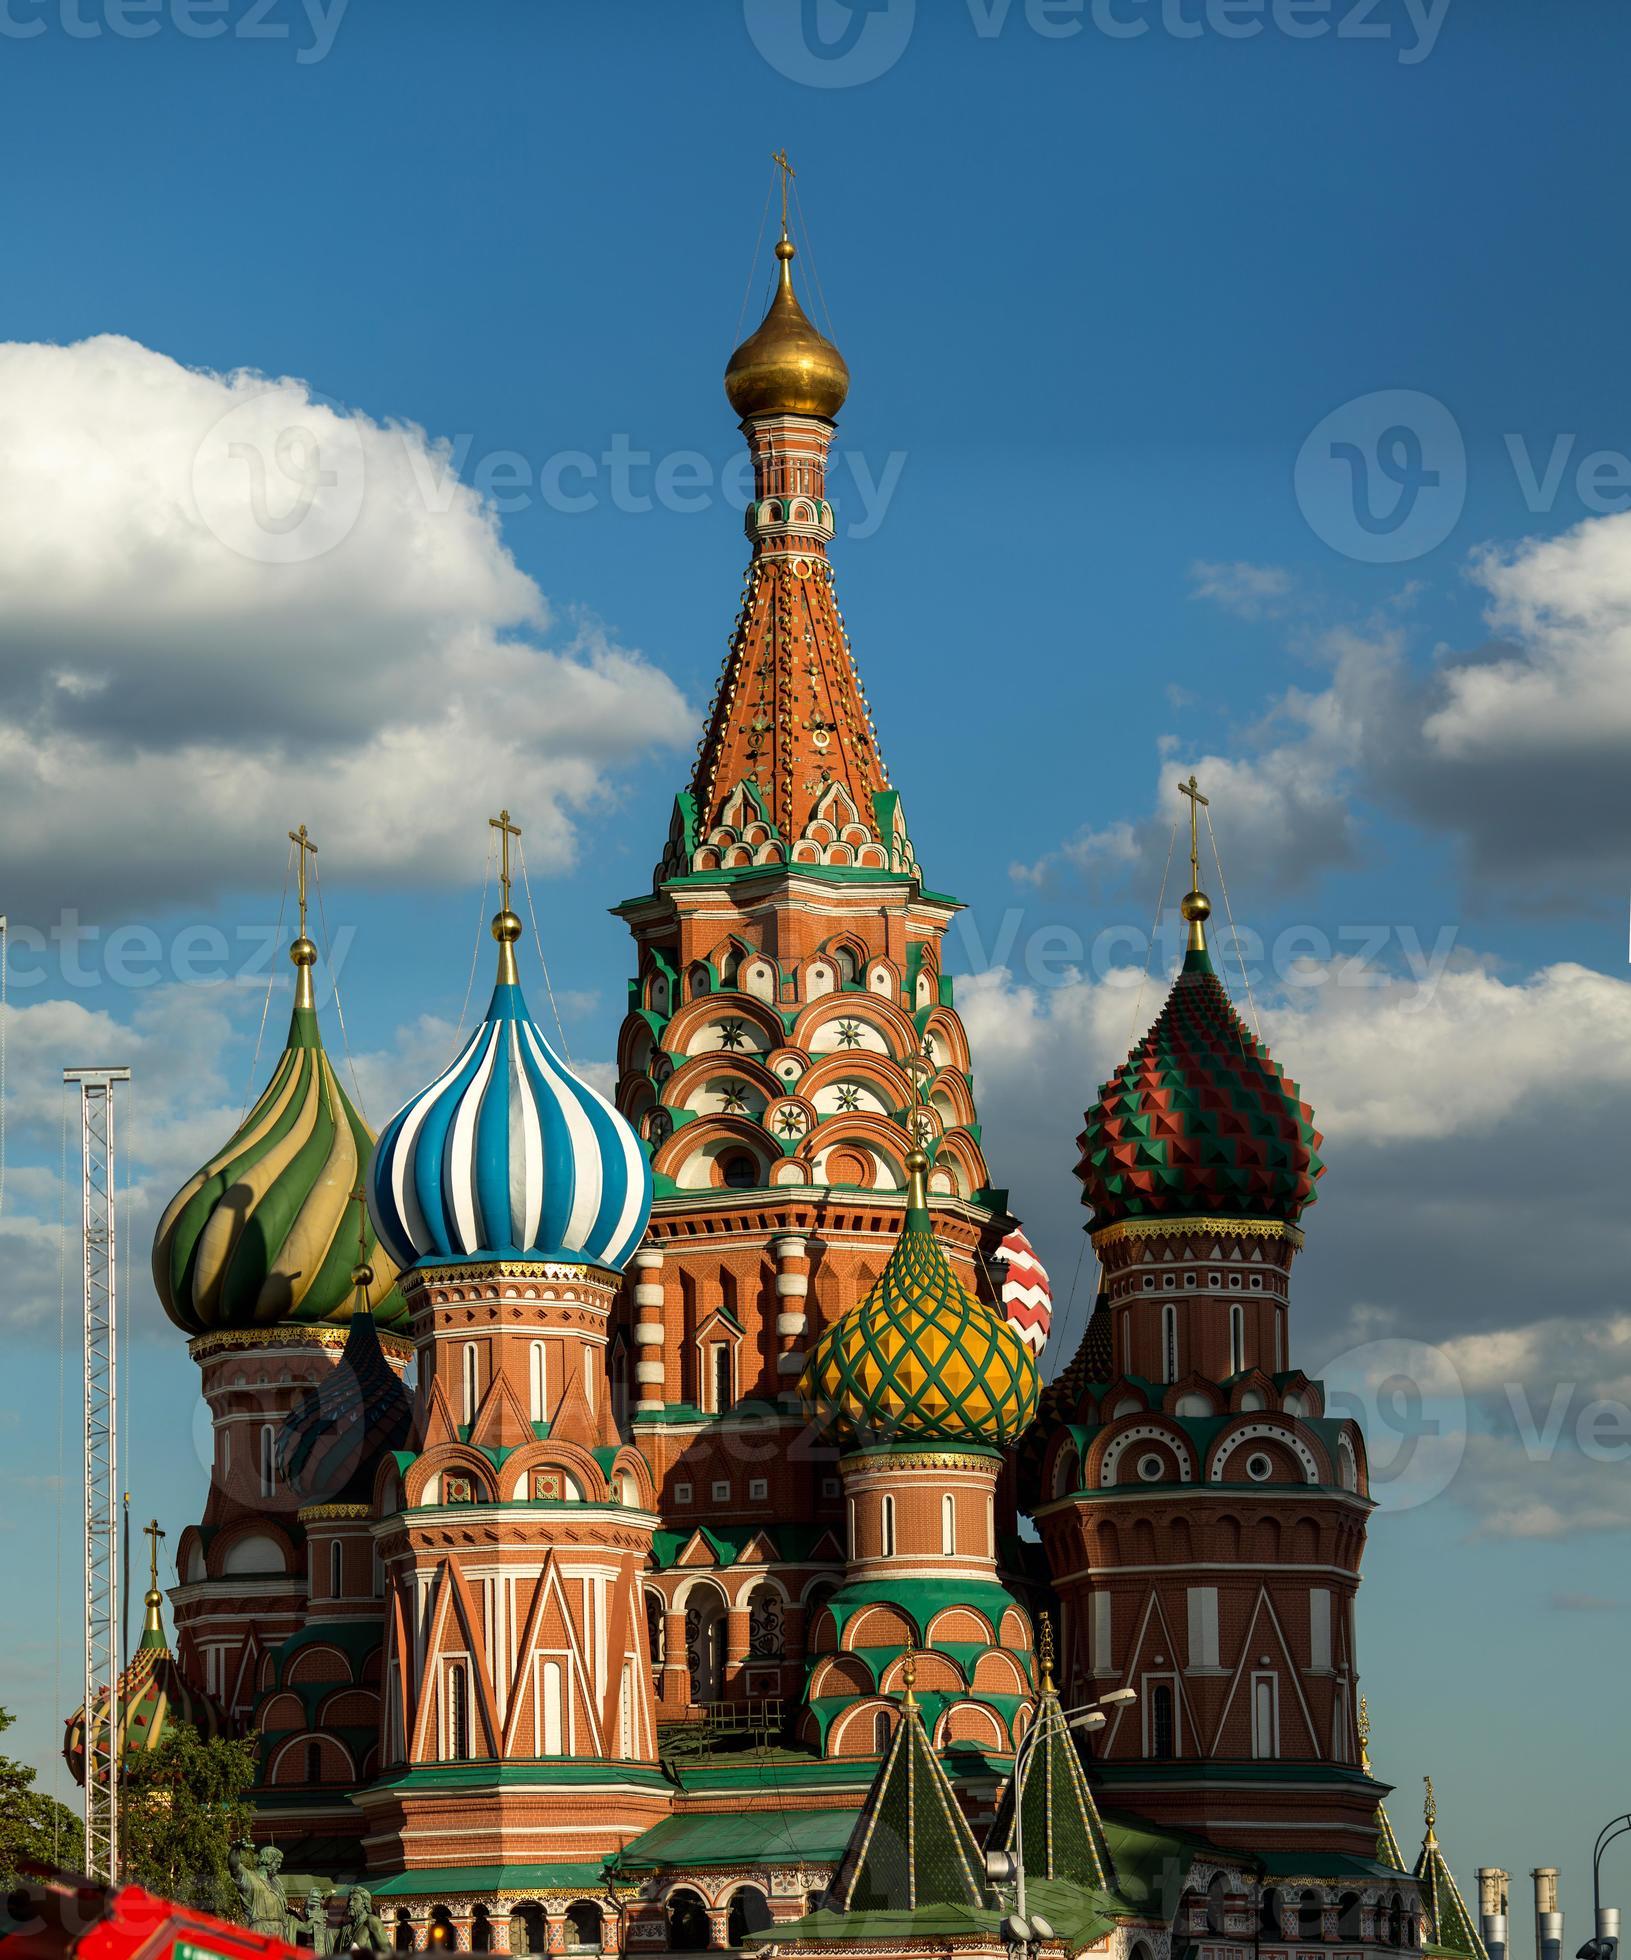 Moskou, st. basil's kathedraal foto